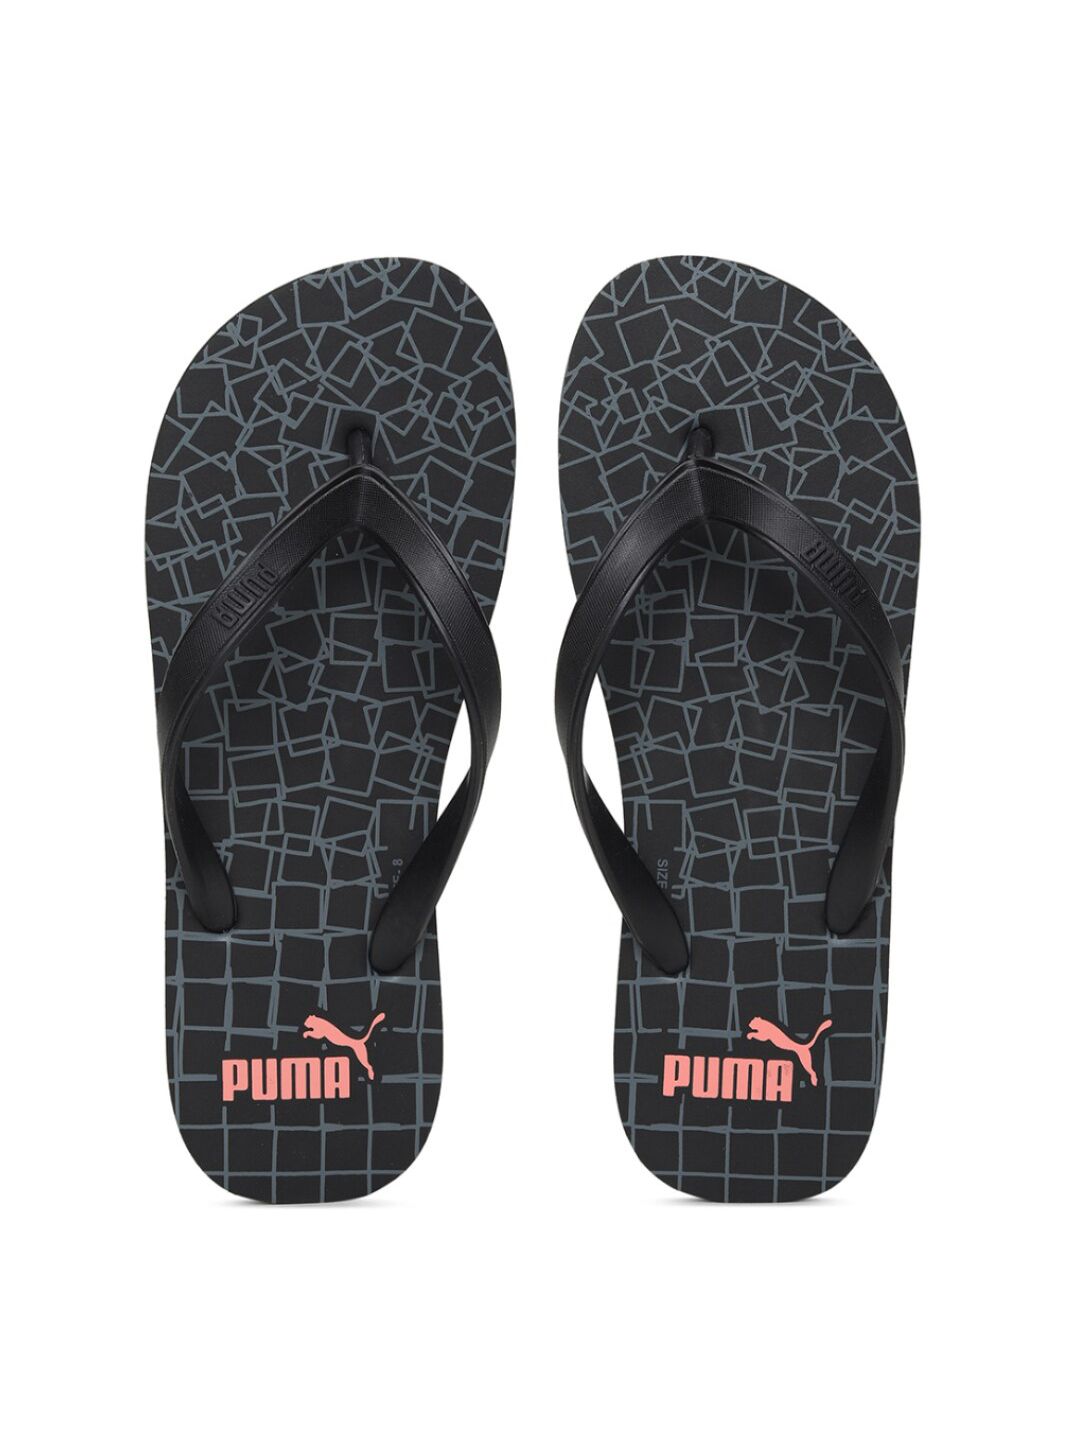 Puma Unisex Black & Grey Printed Thong Flip-Flops Price in India